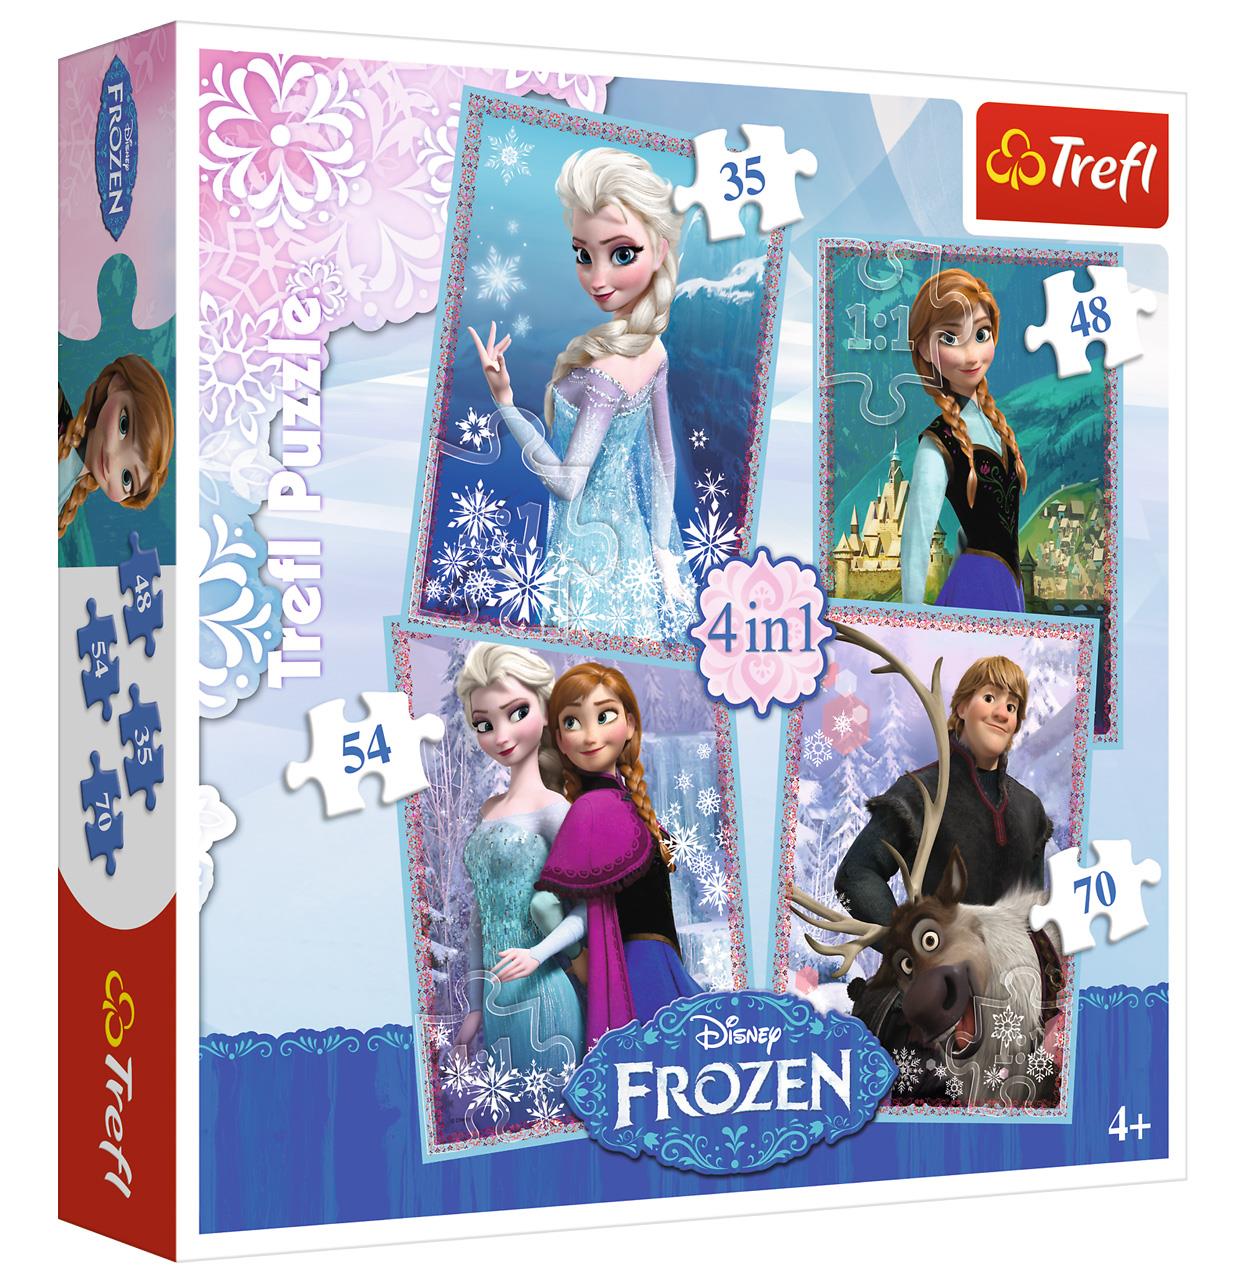 Trefl Çocuk Puzzle 34210 Frozen, Disney 35+48+54+70 Parça 4 in 1 Puzzle